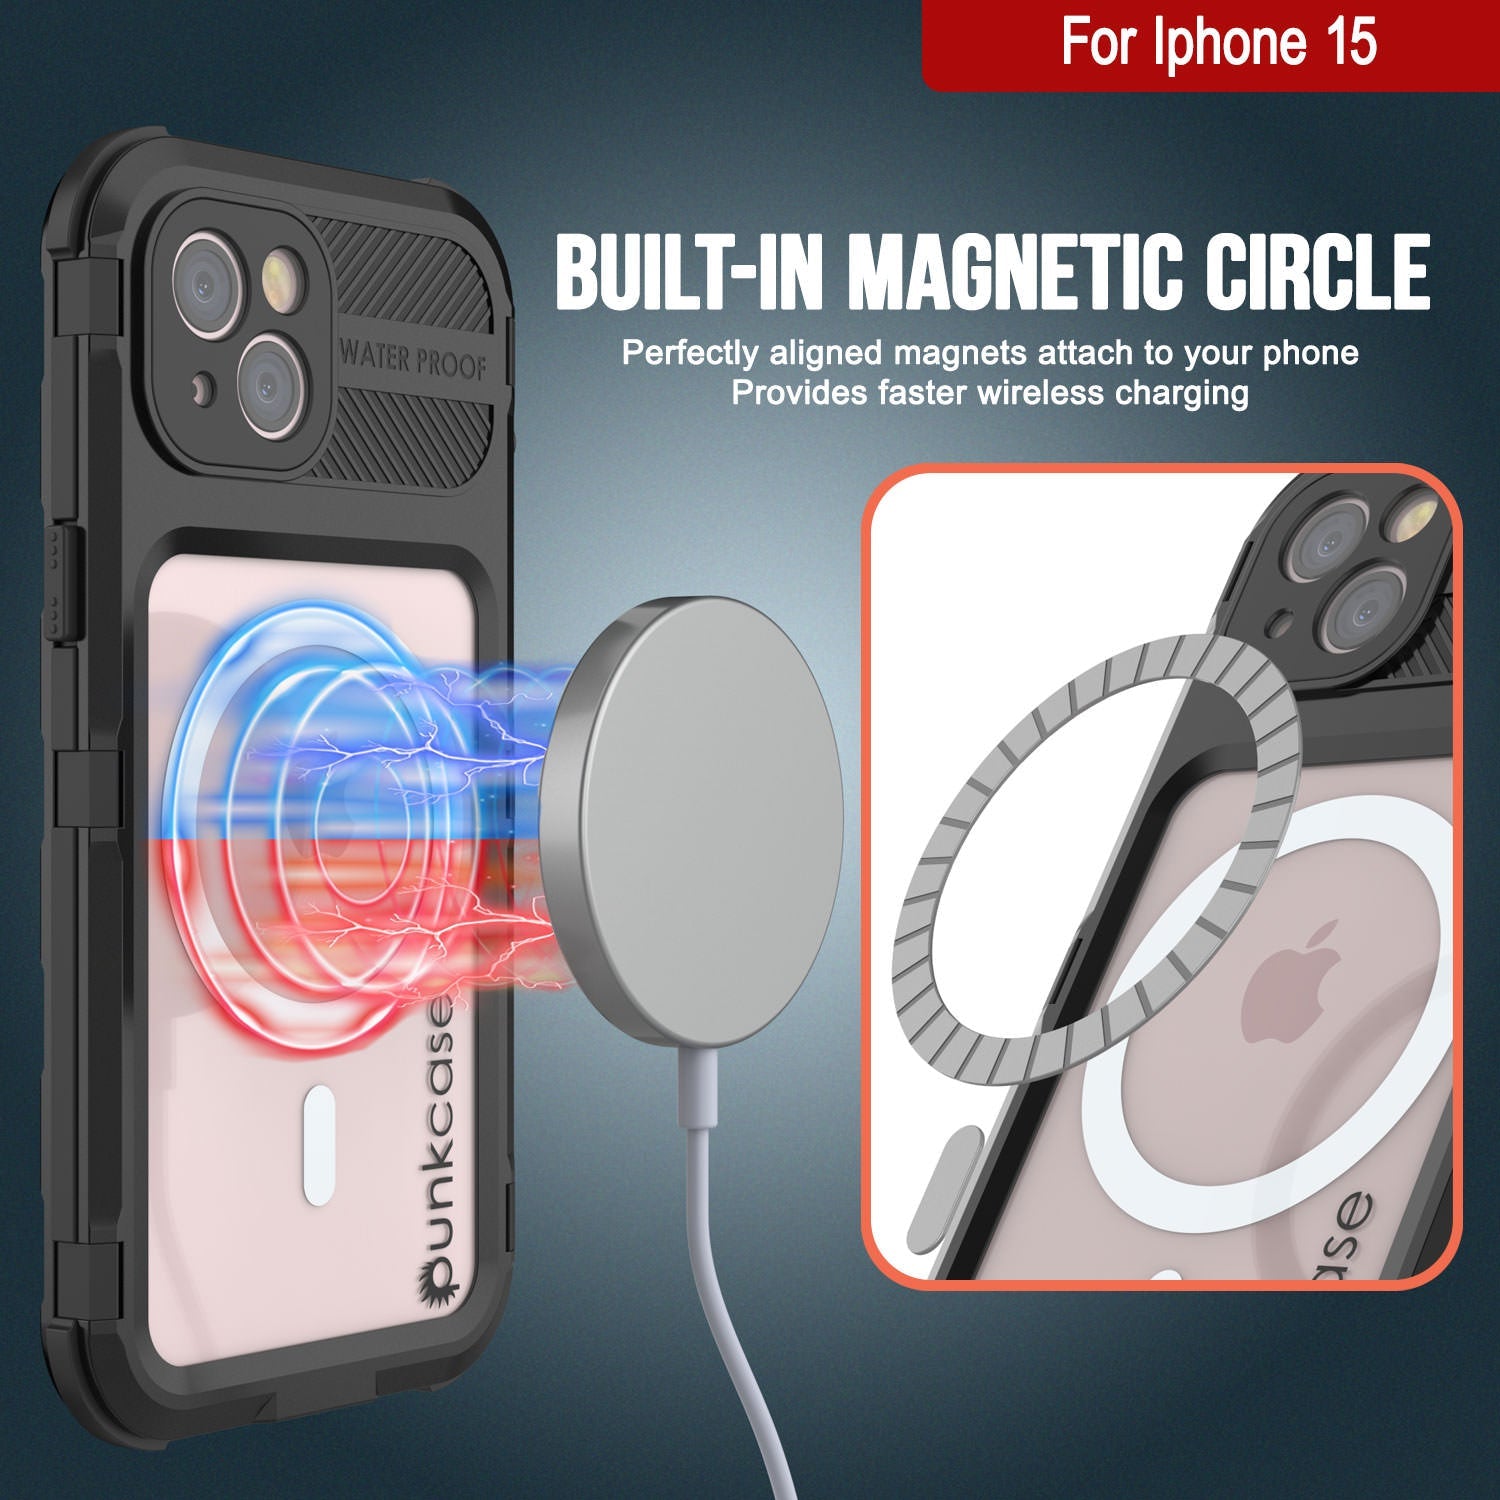 iPhone 15 Metal Extreme 2.0 Series Aluminum Waterproof Case IP68 W/Buillt in Screen Protector [Black]